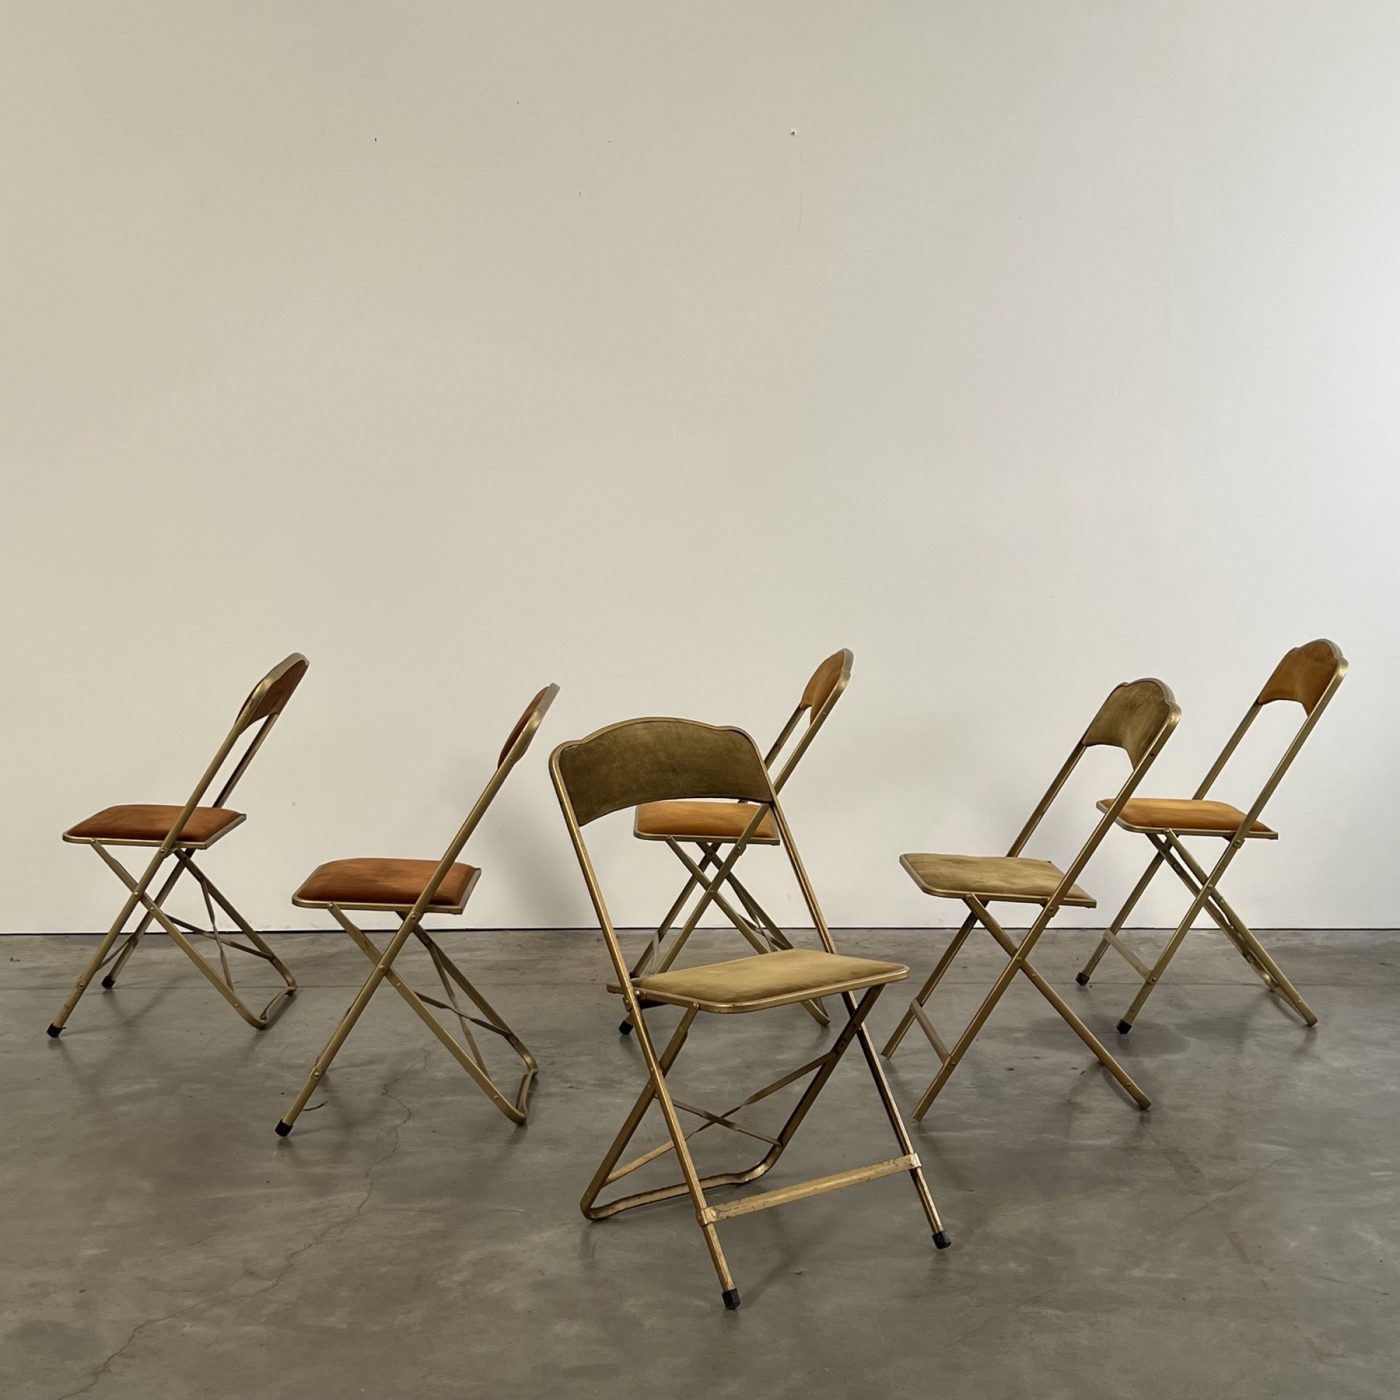 objet-vagabond-folding-chairs0007